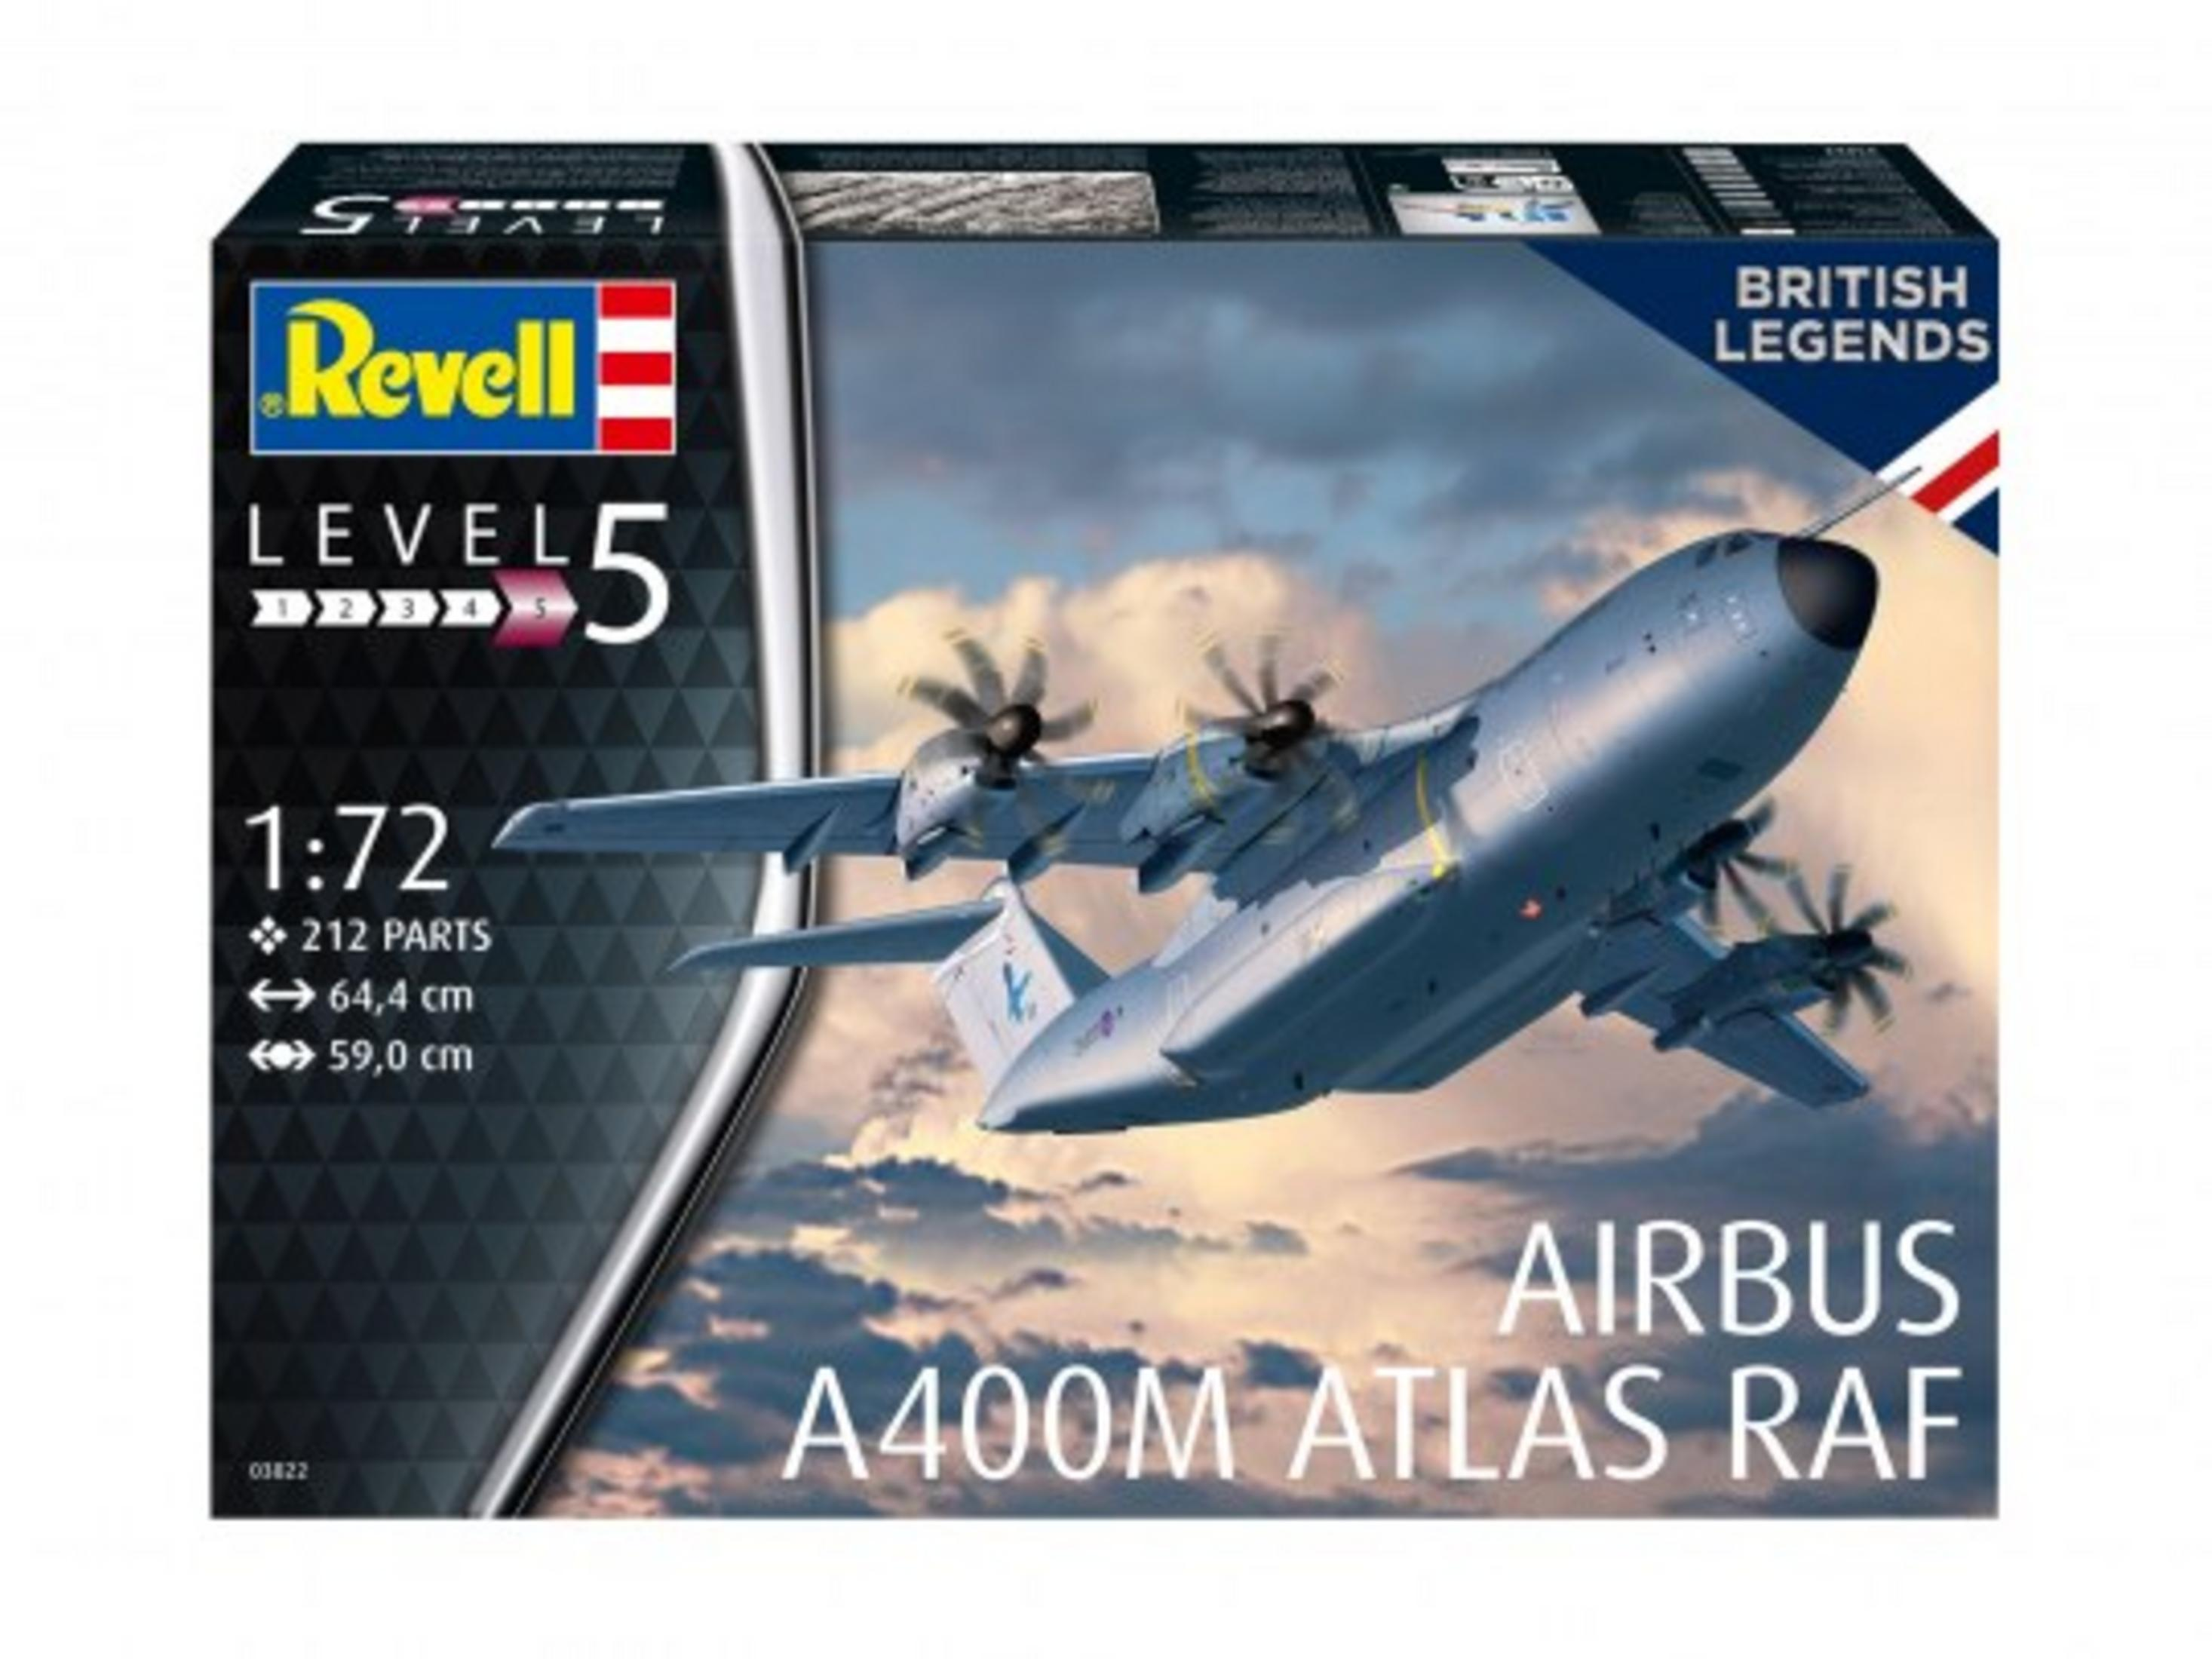 REVELL 03822 AIRBUS RAF ATLAS A400M Modellbausatz